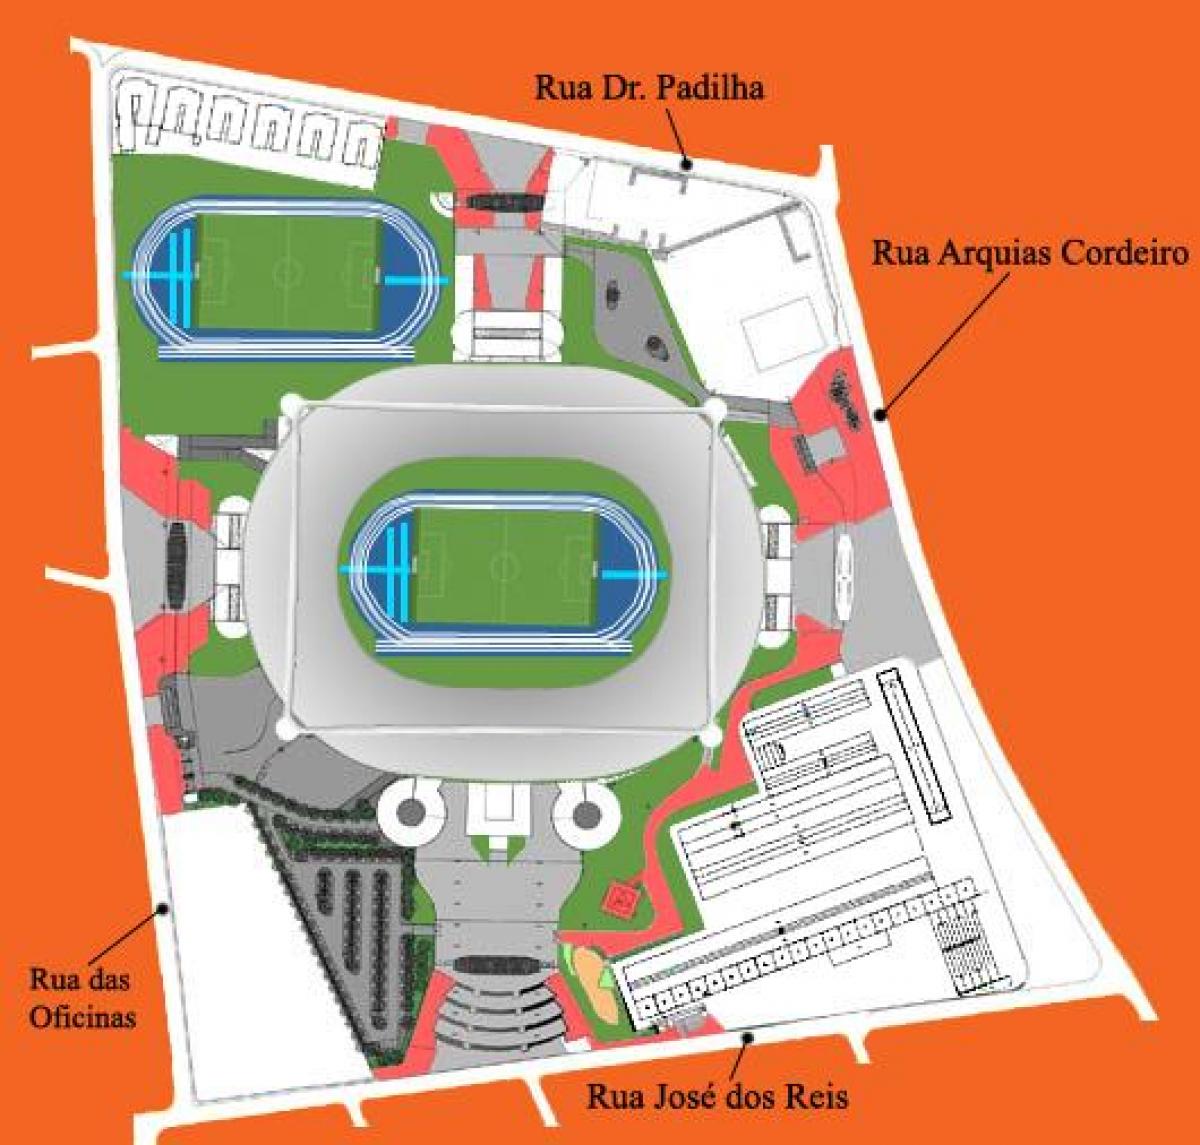 Map of stadium Engenhão